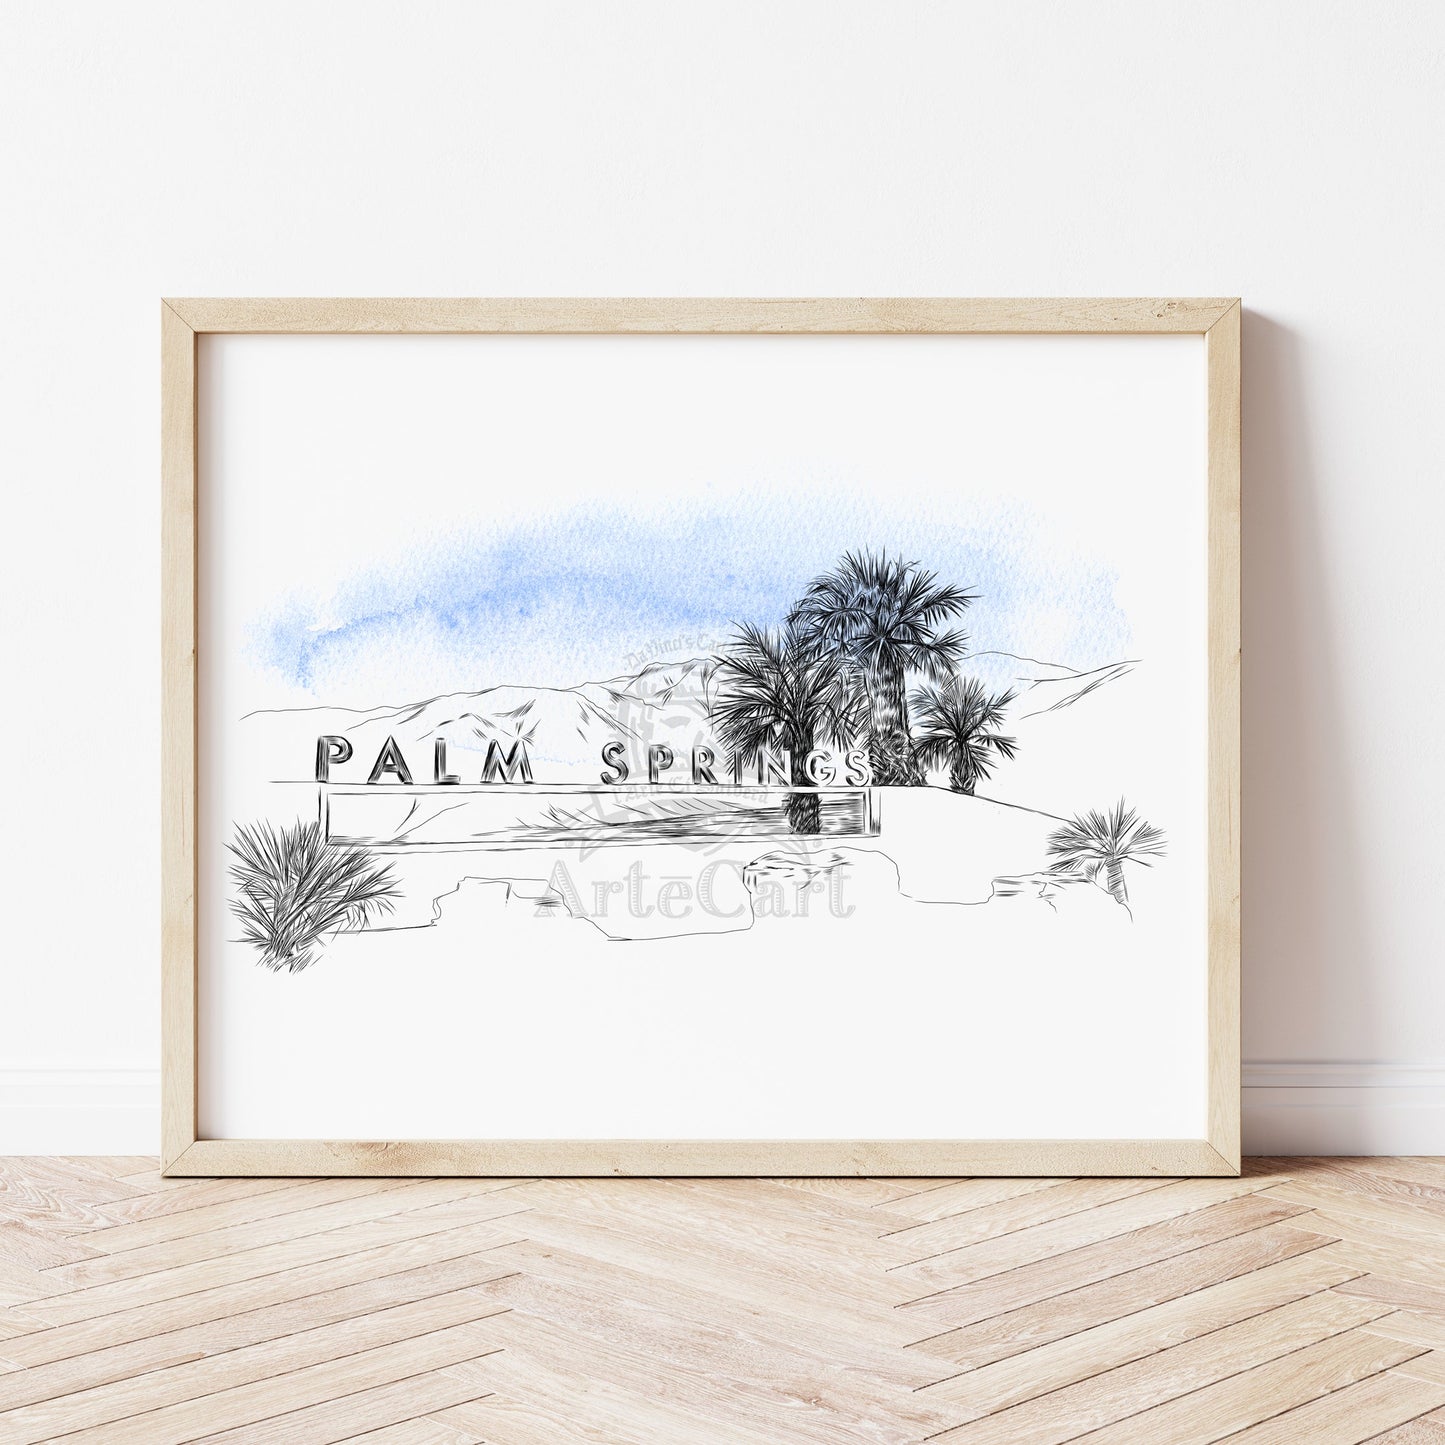 Palm Springs Sign, California Hand Drawn Fine Art Prints